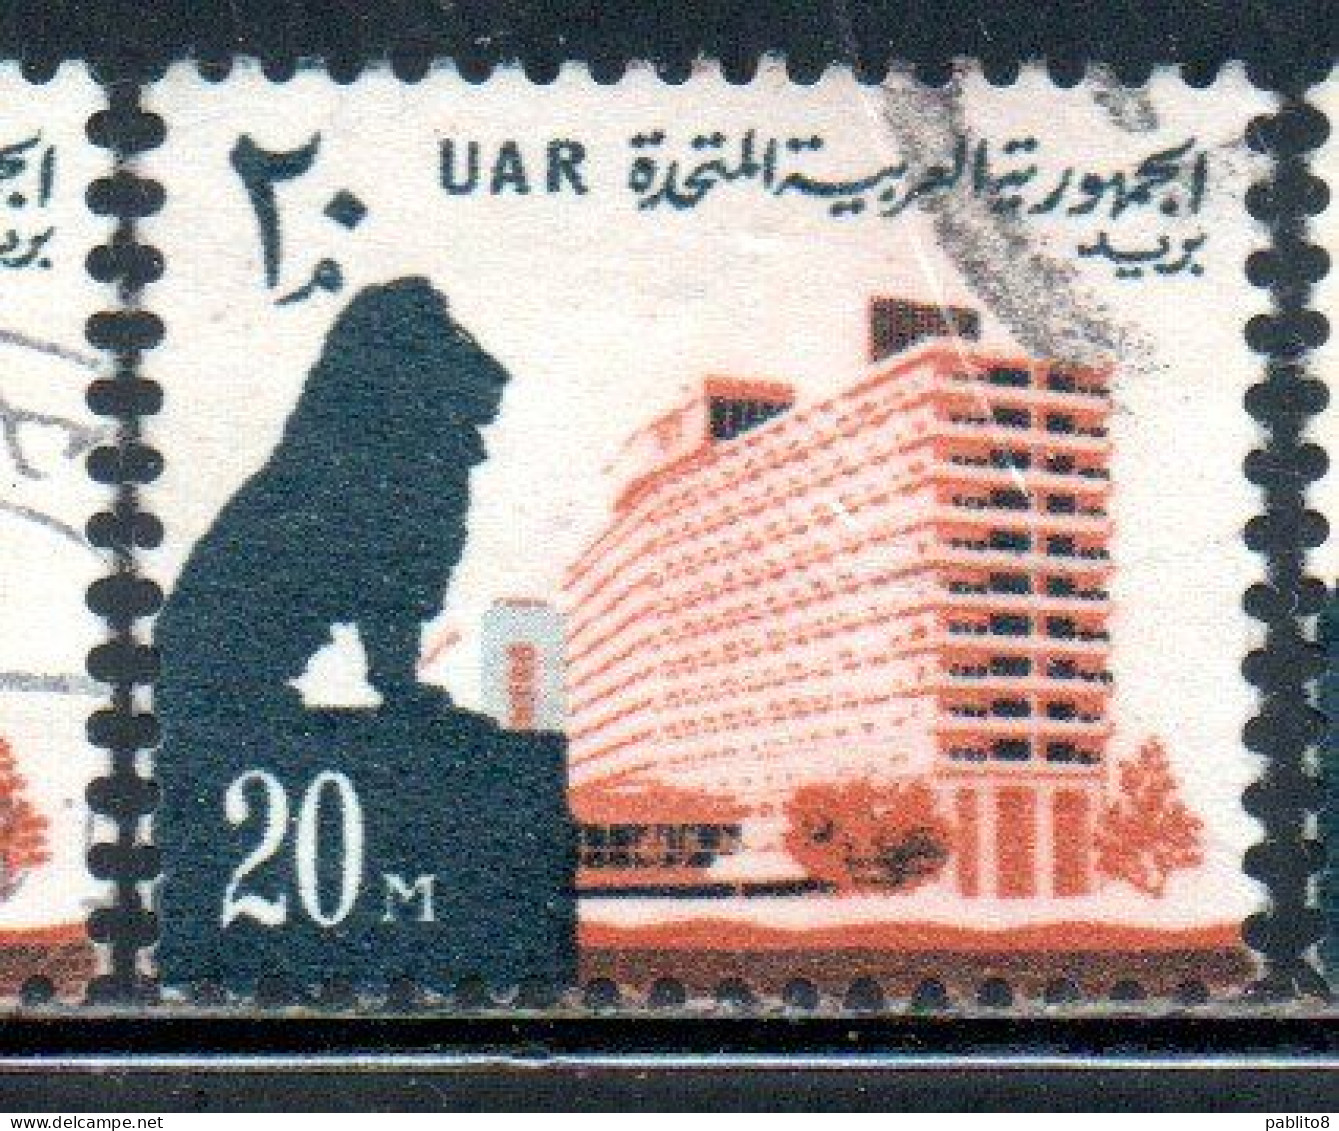 UAR EGYPT EGITTO 1964 1967 LION AND NILE HILTON HOTEL 20m USED USATO OBLITERE' - Usados